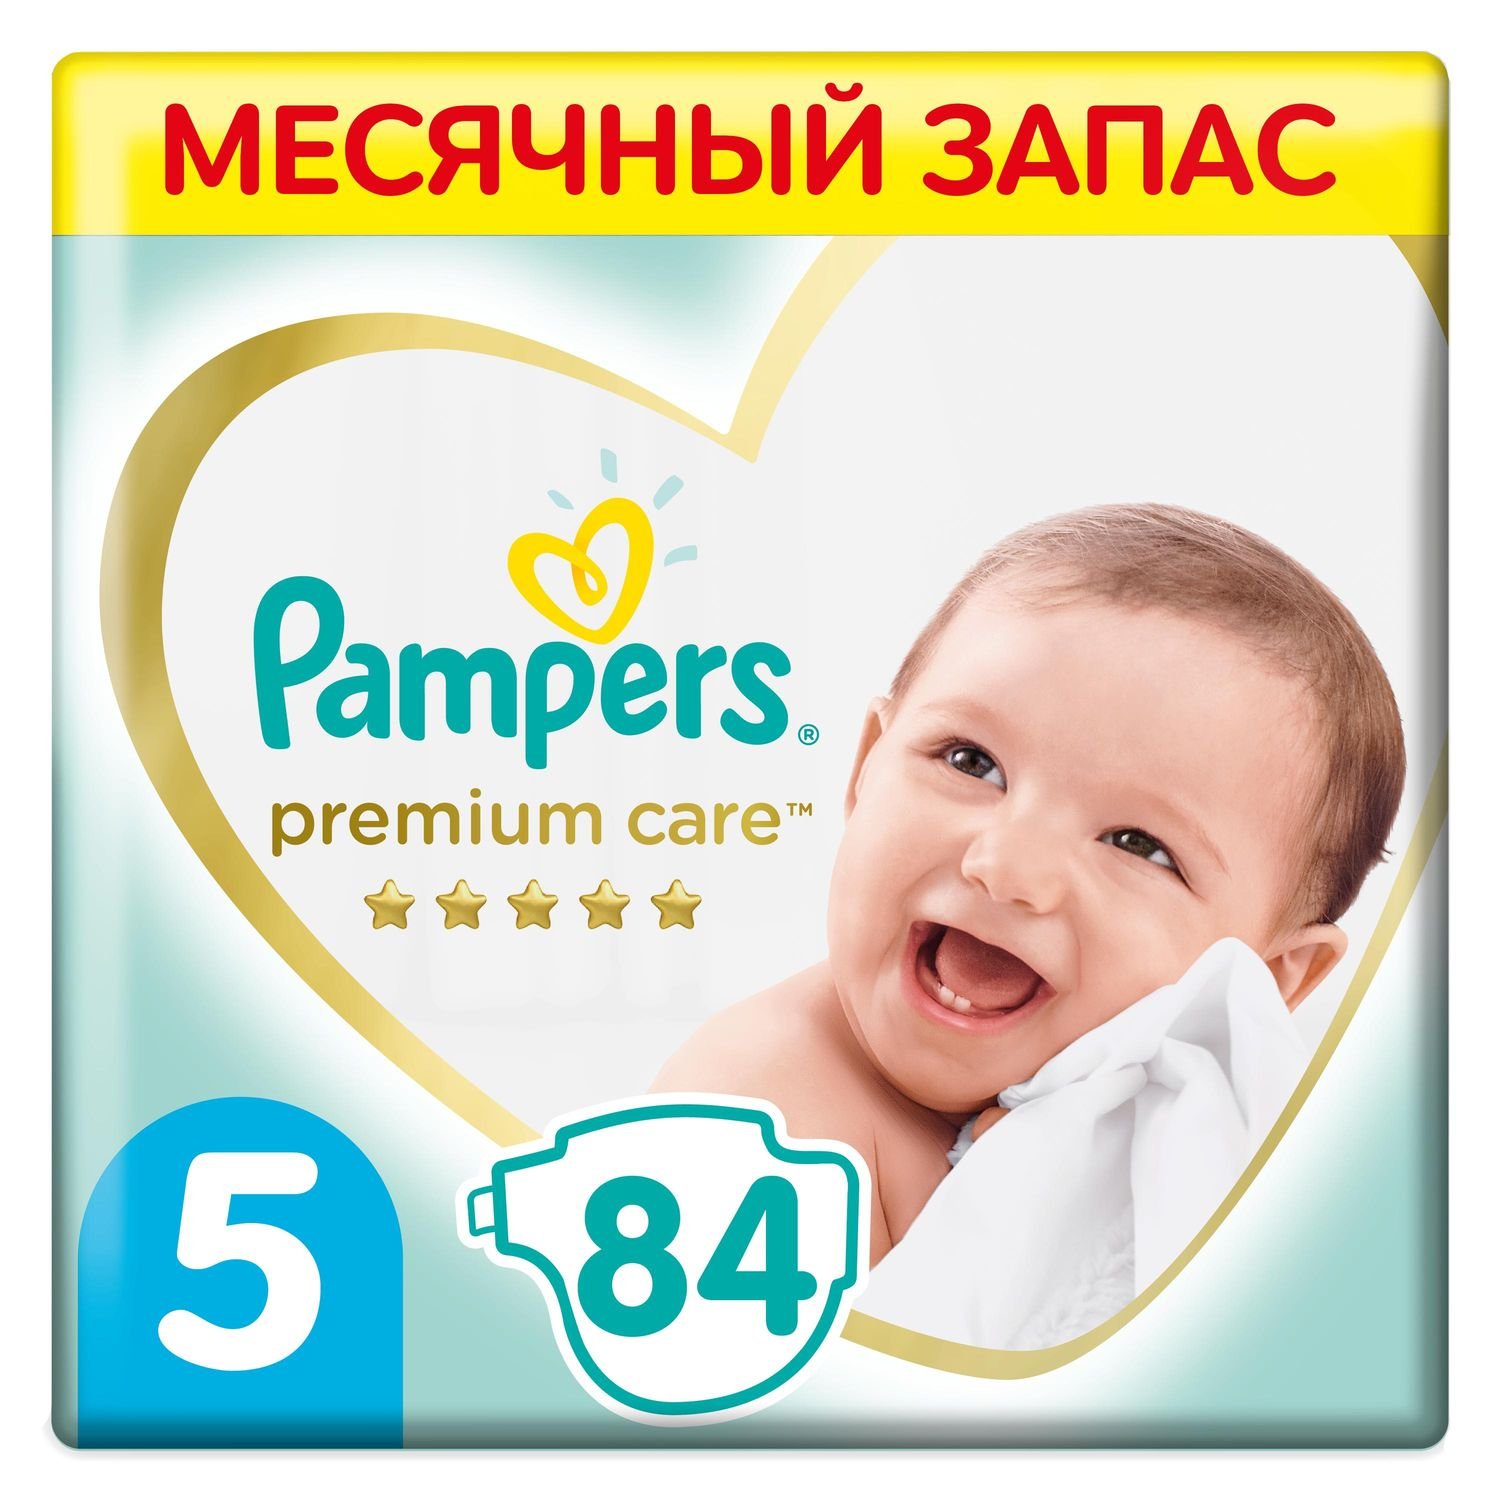 Подгузники Pampers Premium Care 5 11+кг 84шт